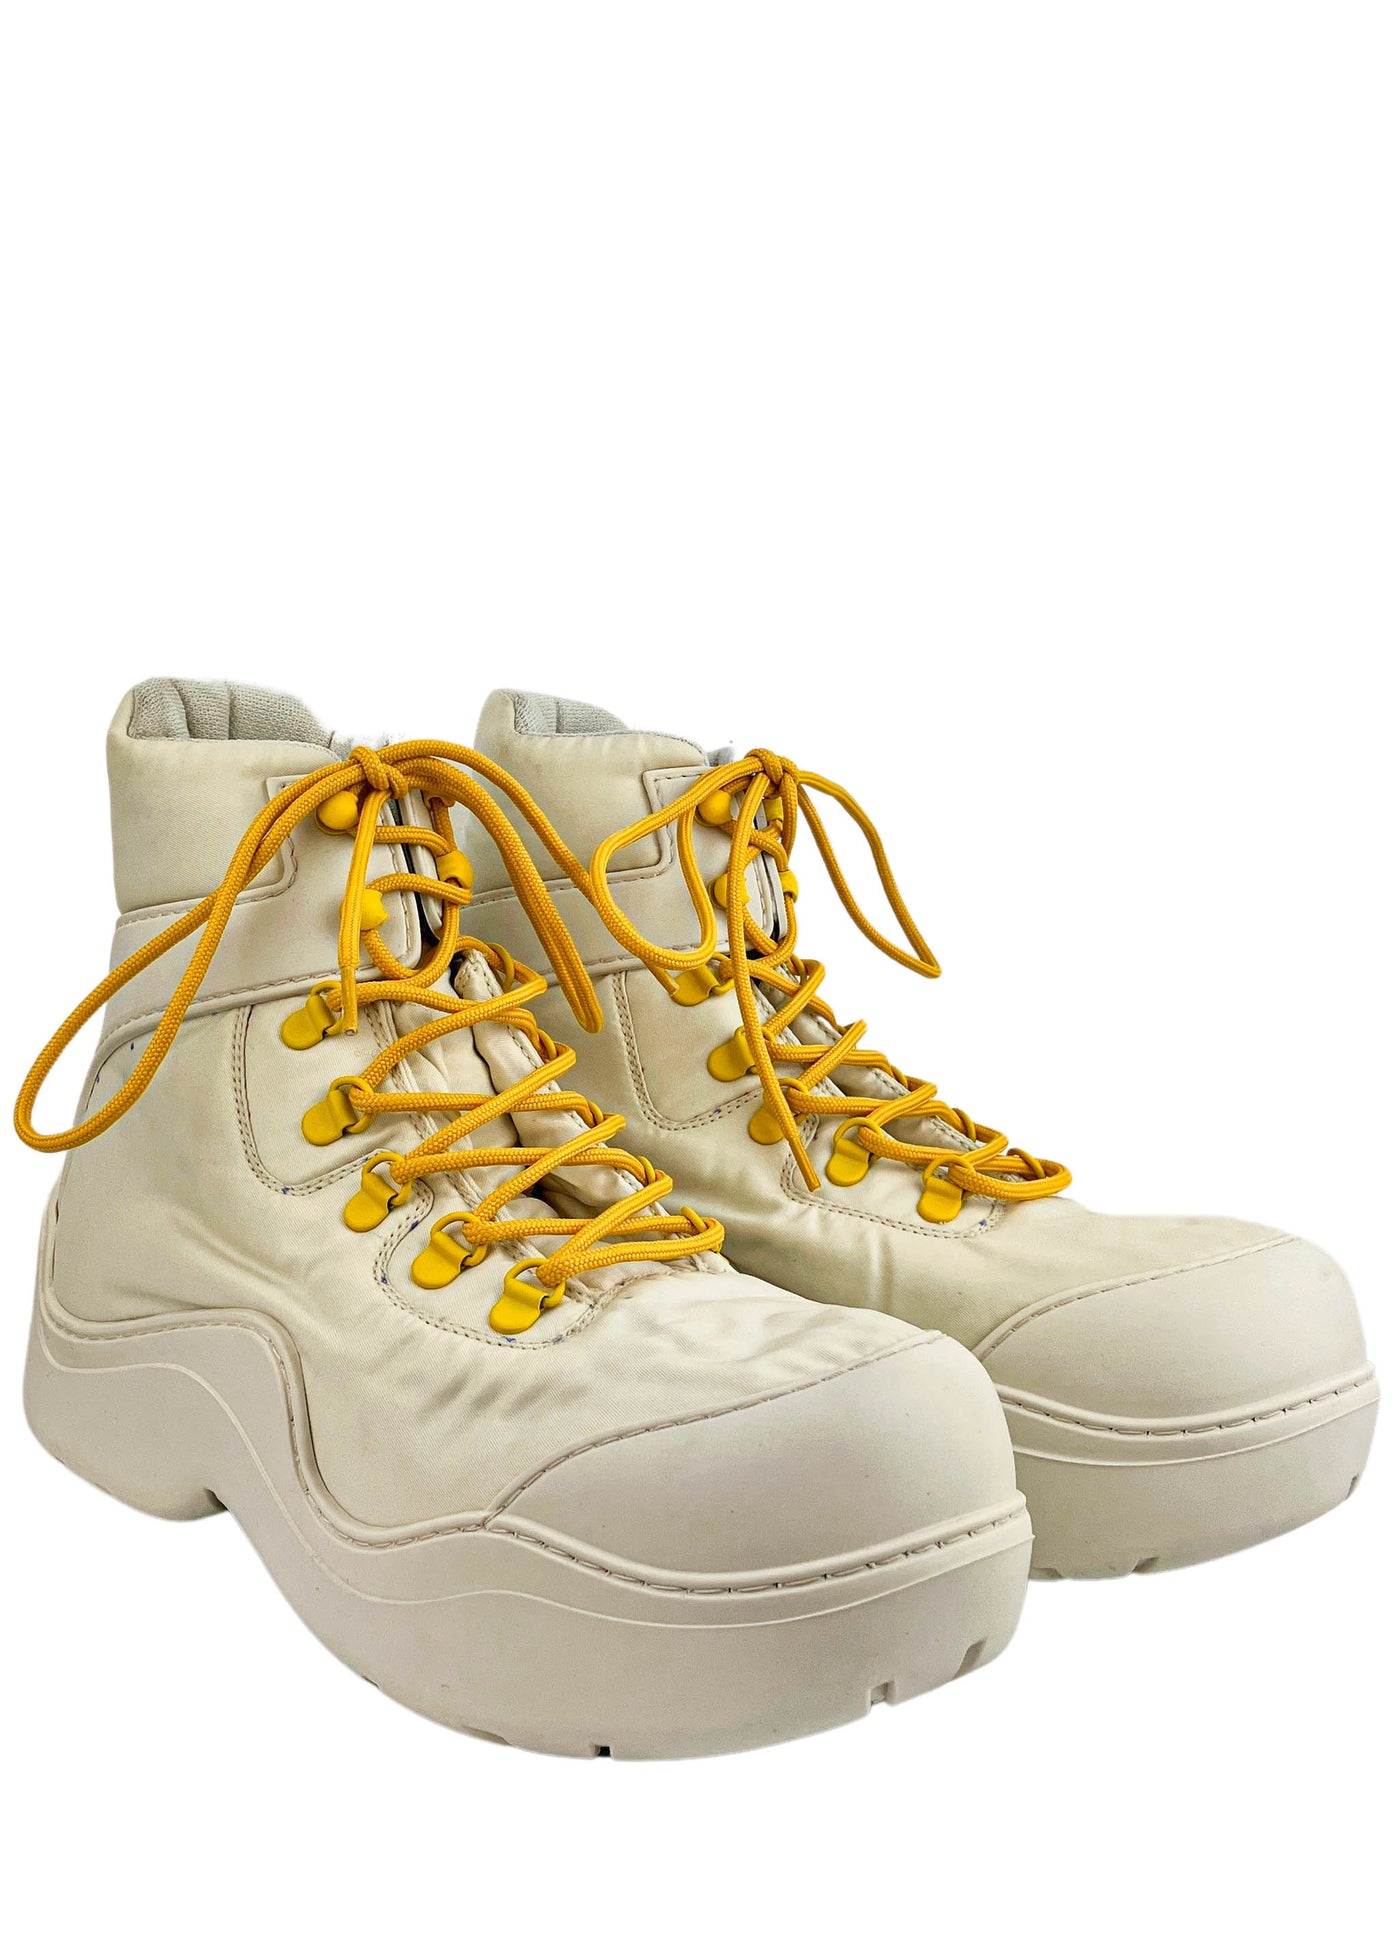 Bottega Venetta Puddle Ankle Boots in White - Discounts on Bottega Veneta at UAL